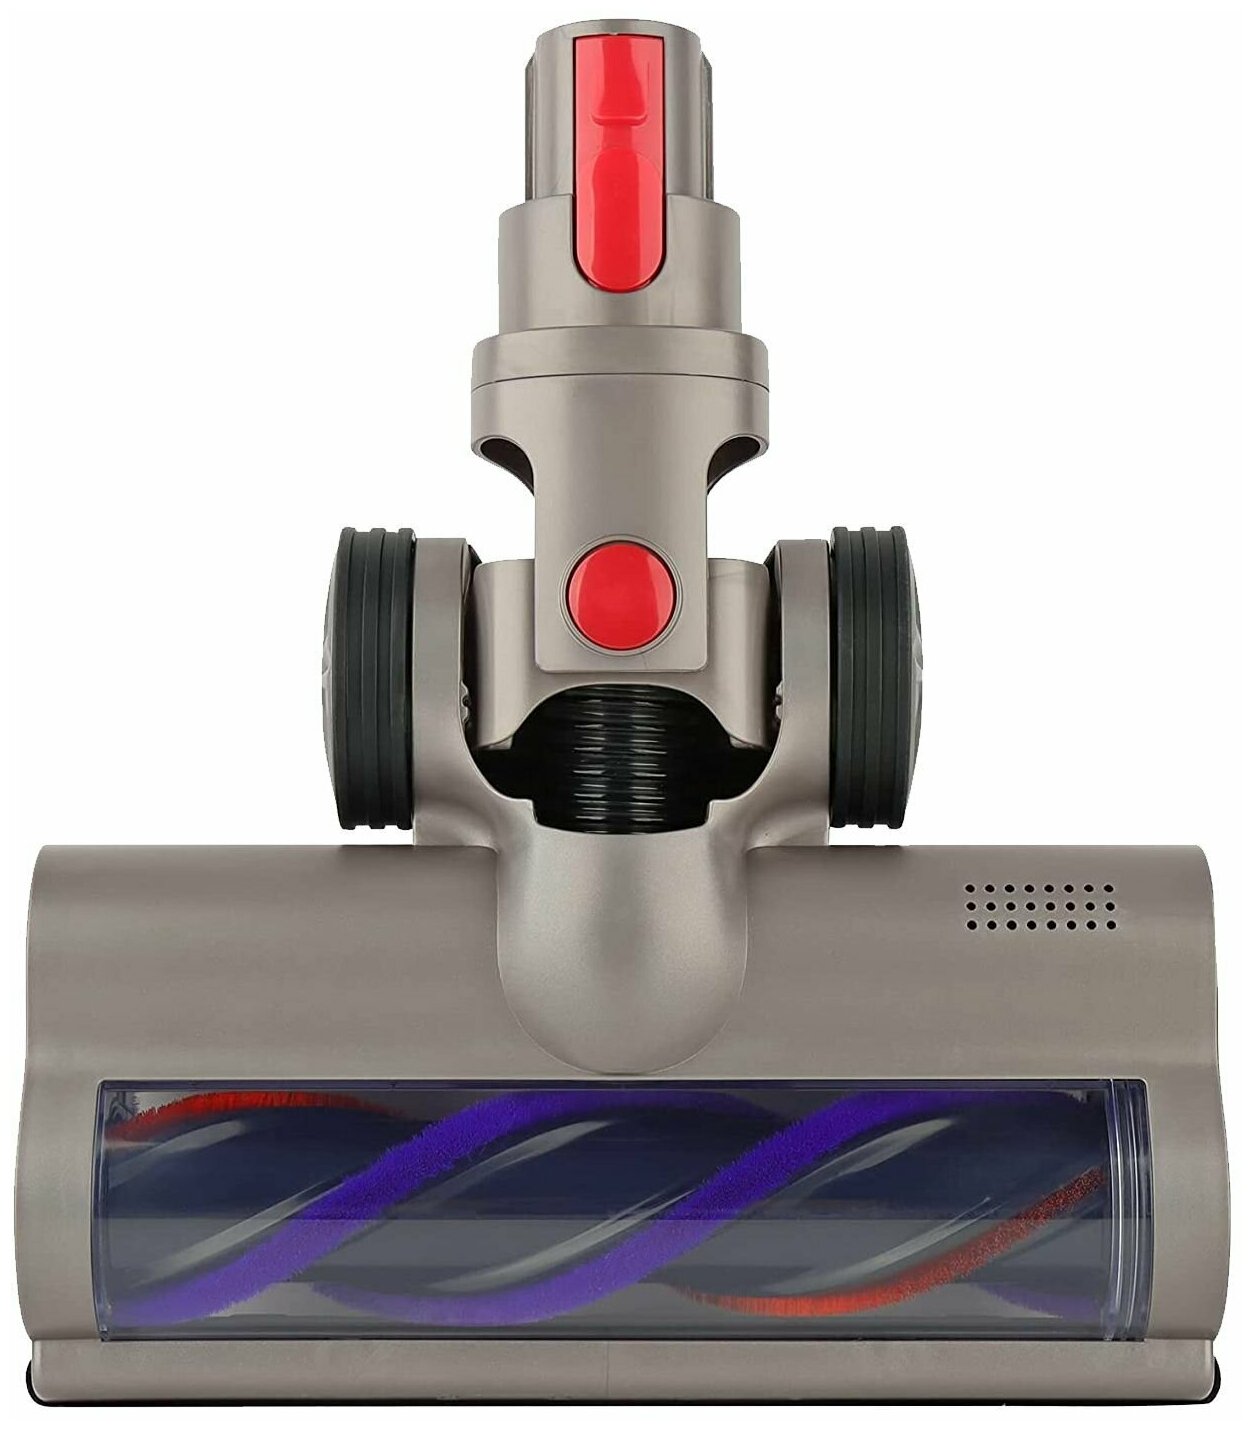 Турбощетка (Turbo brush) c LED подсветкой для пылесоса Dyson V7 V8 V10 V11 моторизованная щетка насадка - фотография № 4